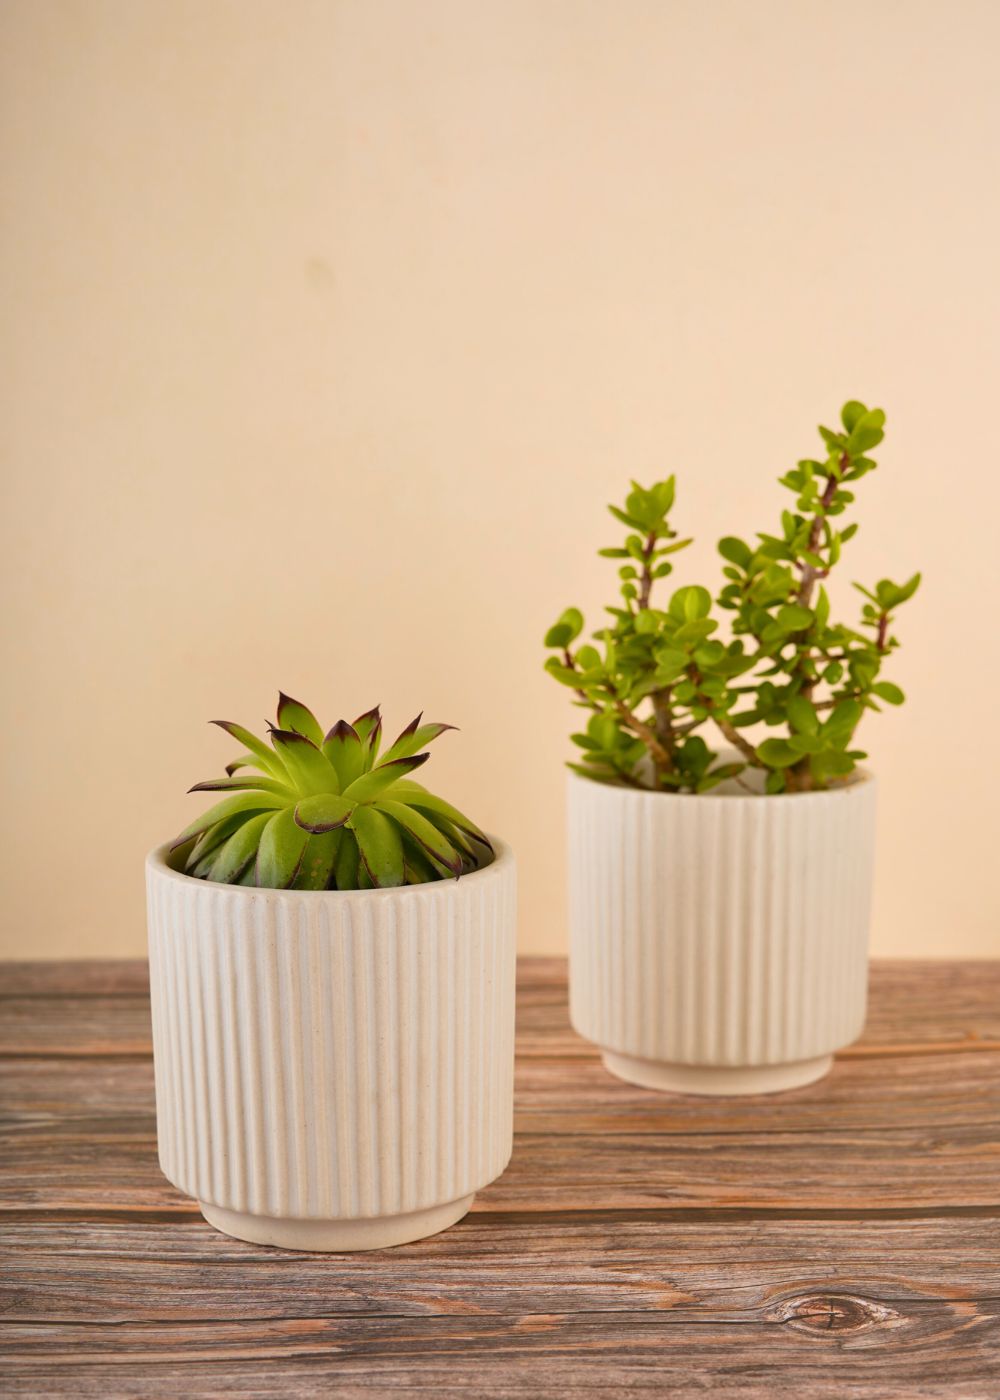 ribbed white planter made by ceramic